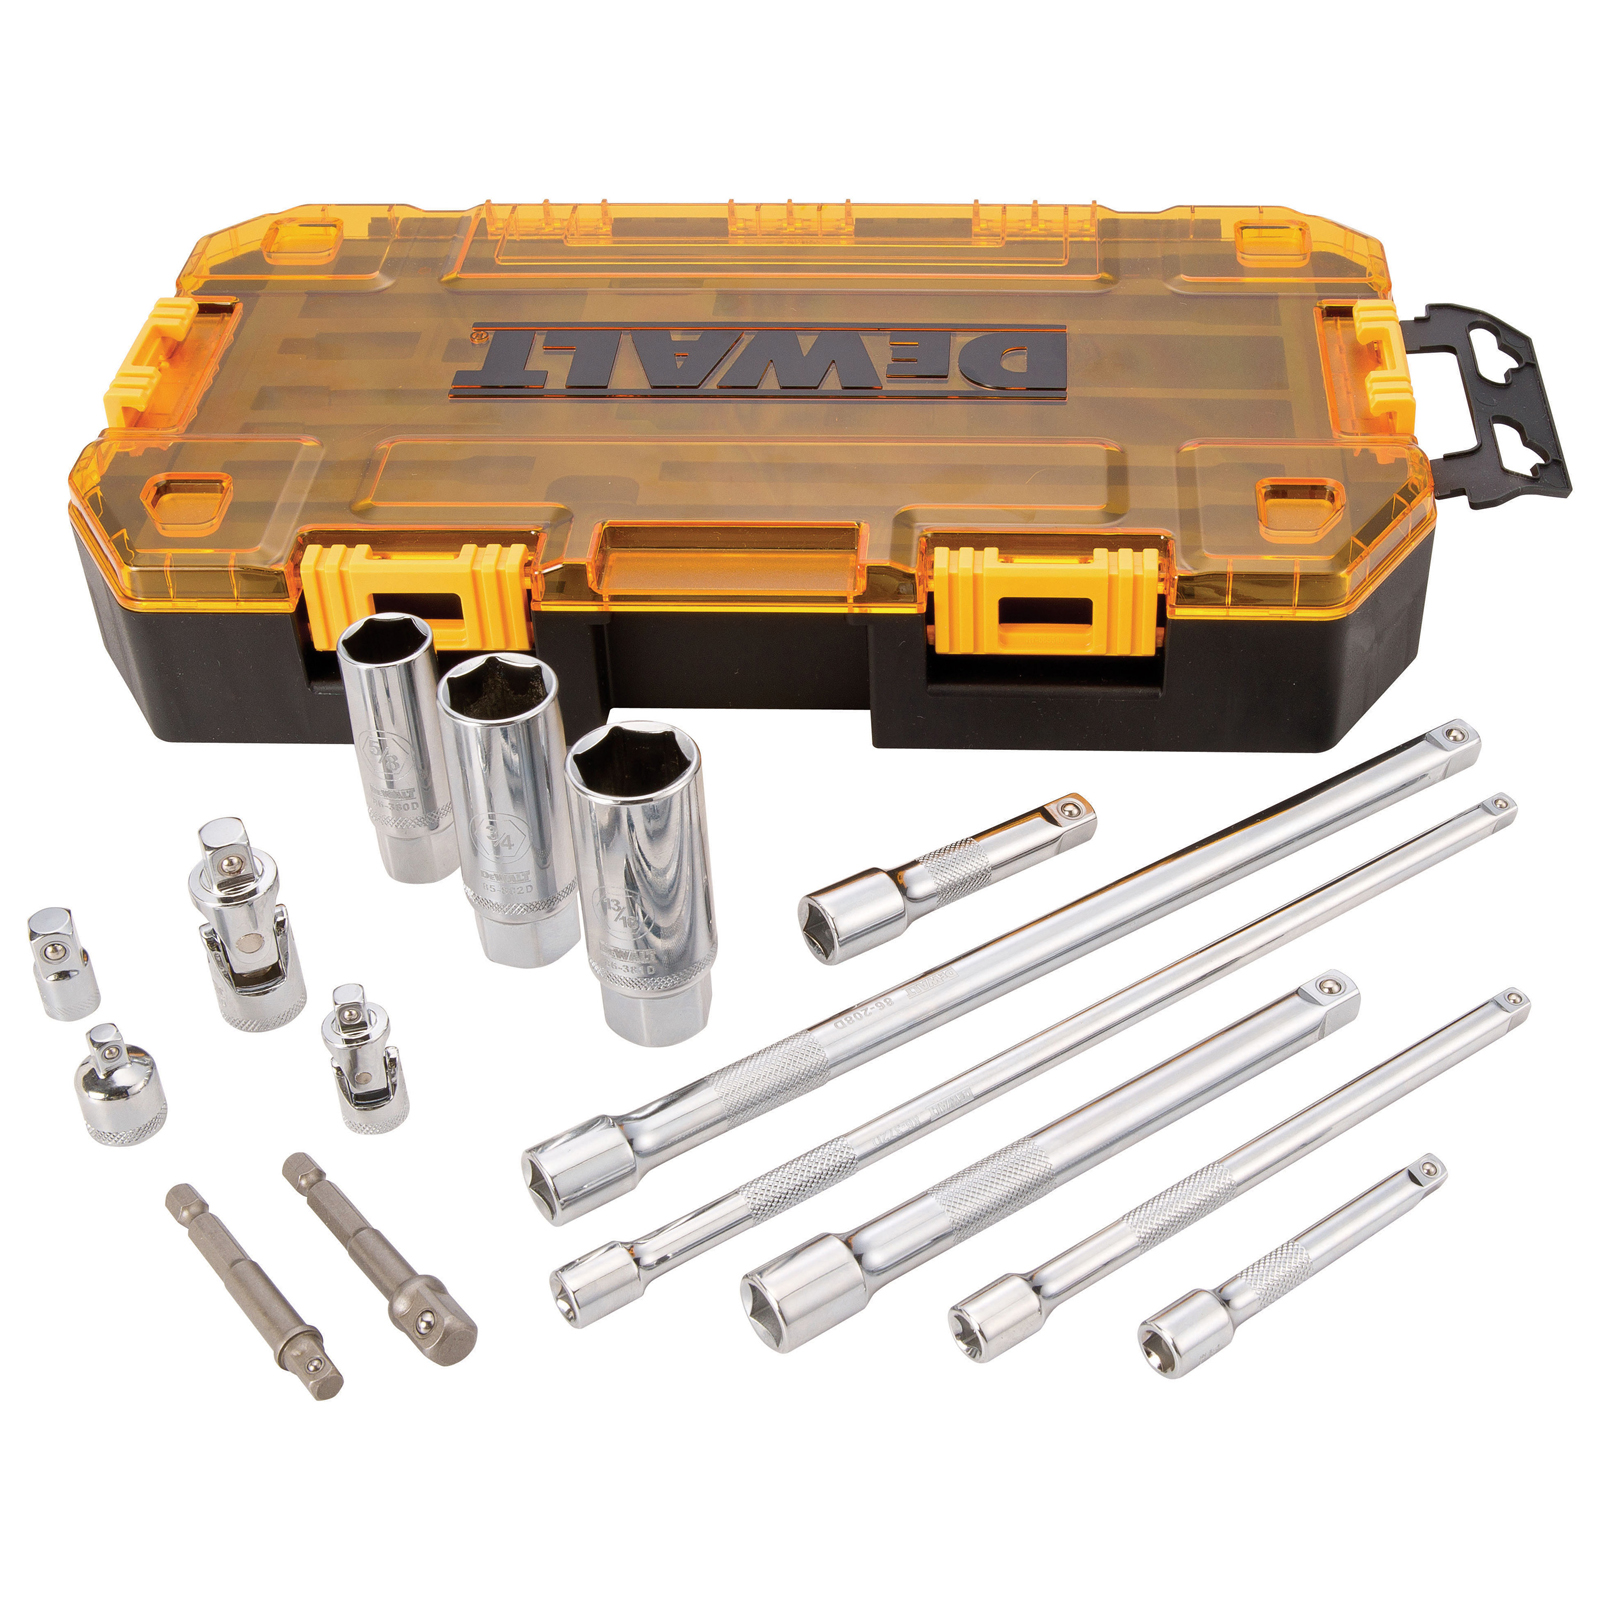 DeWalt DWMT73807 Tough Box Accessory Tool Kit, 15 Piece